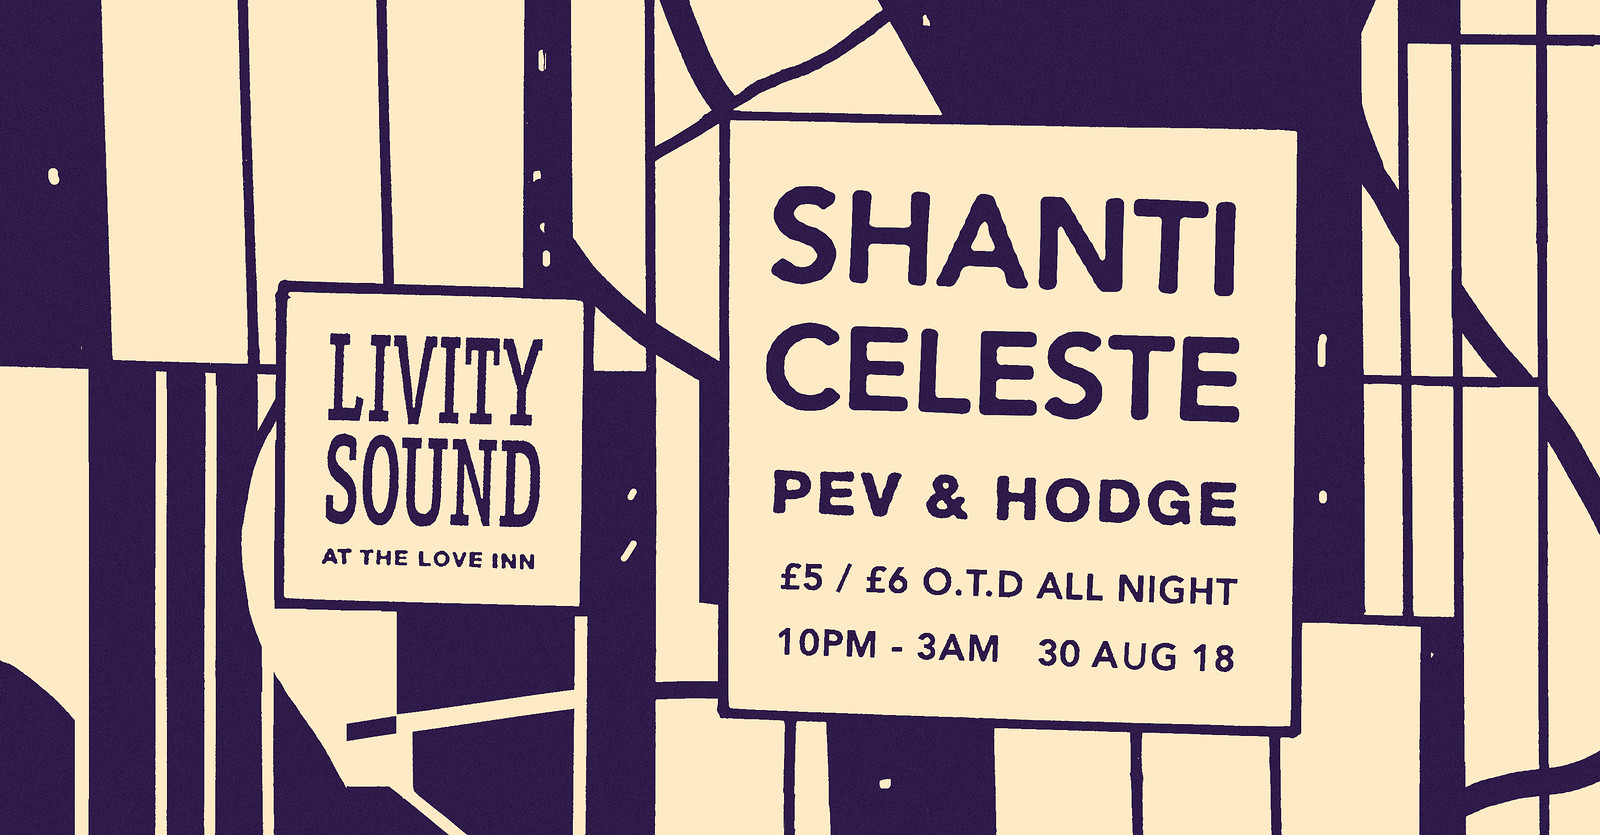 Livity Sound w/ Shanti Celeste, Peverelist & Hodge at The Love Inn